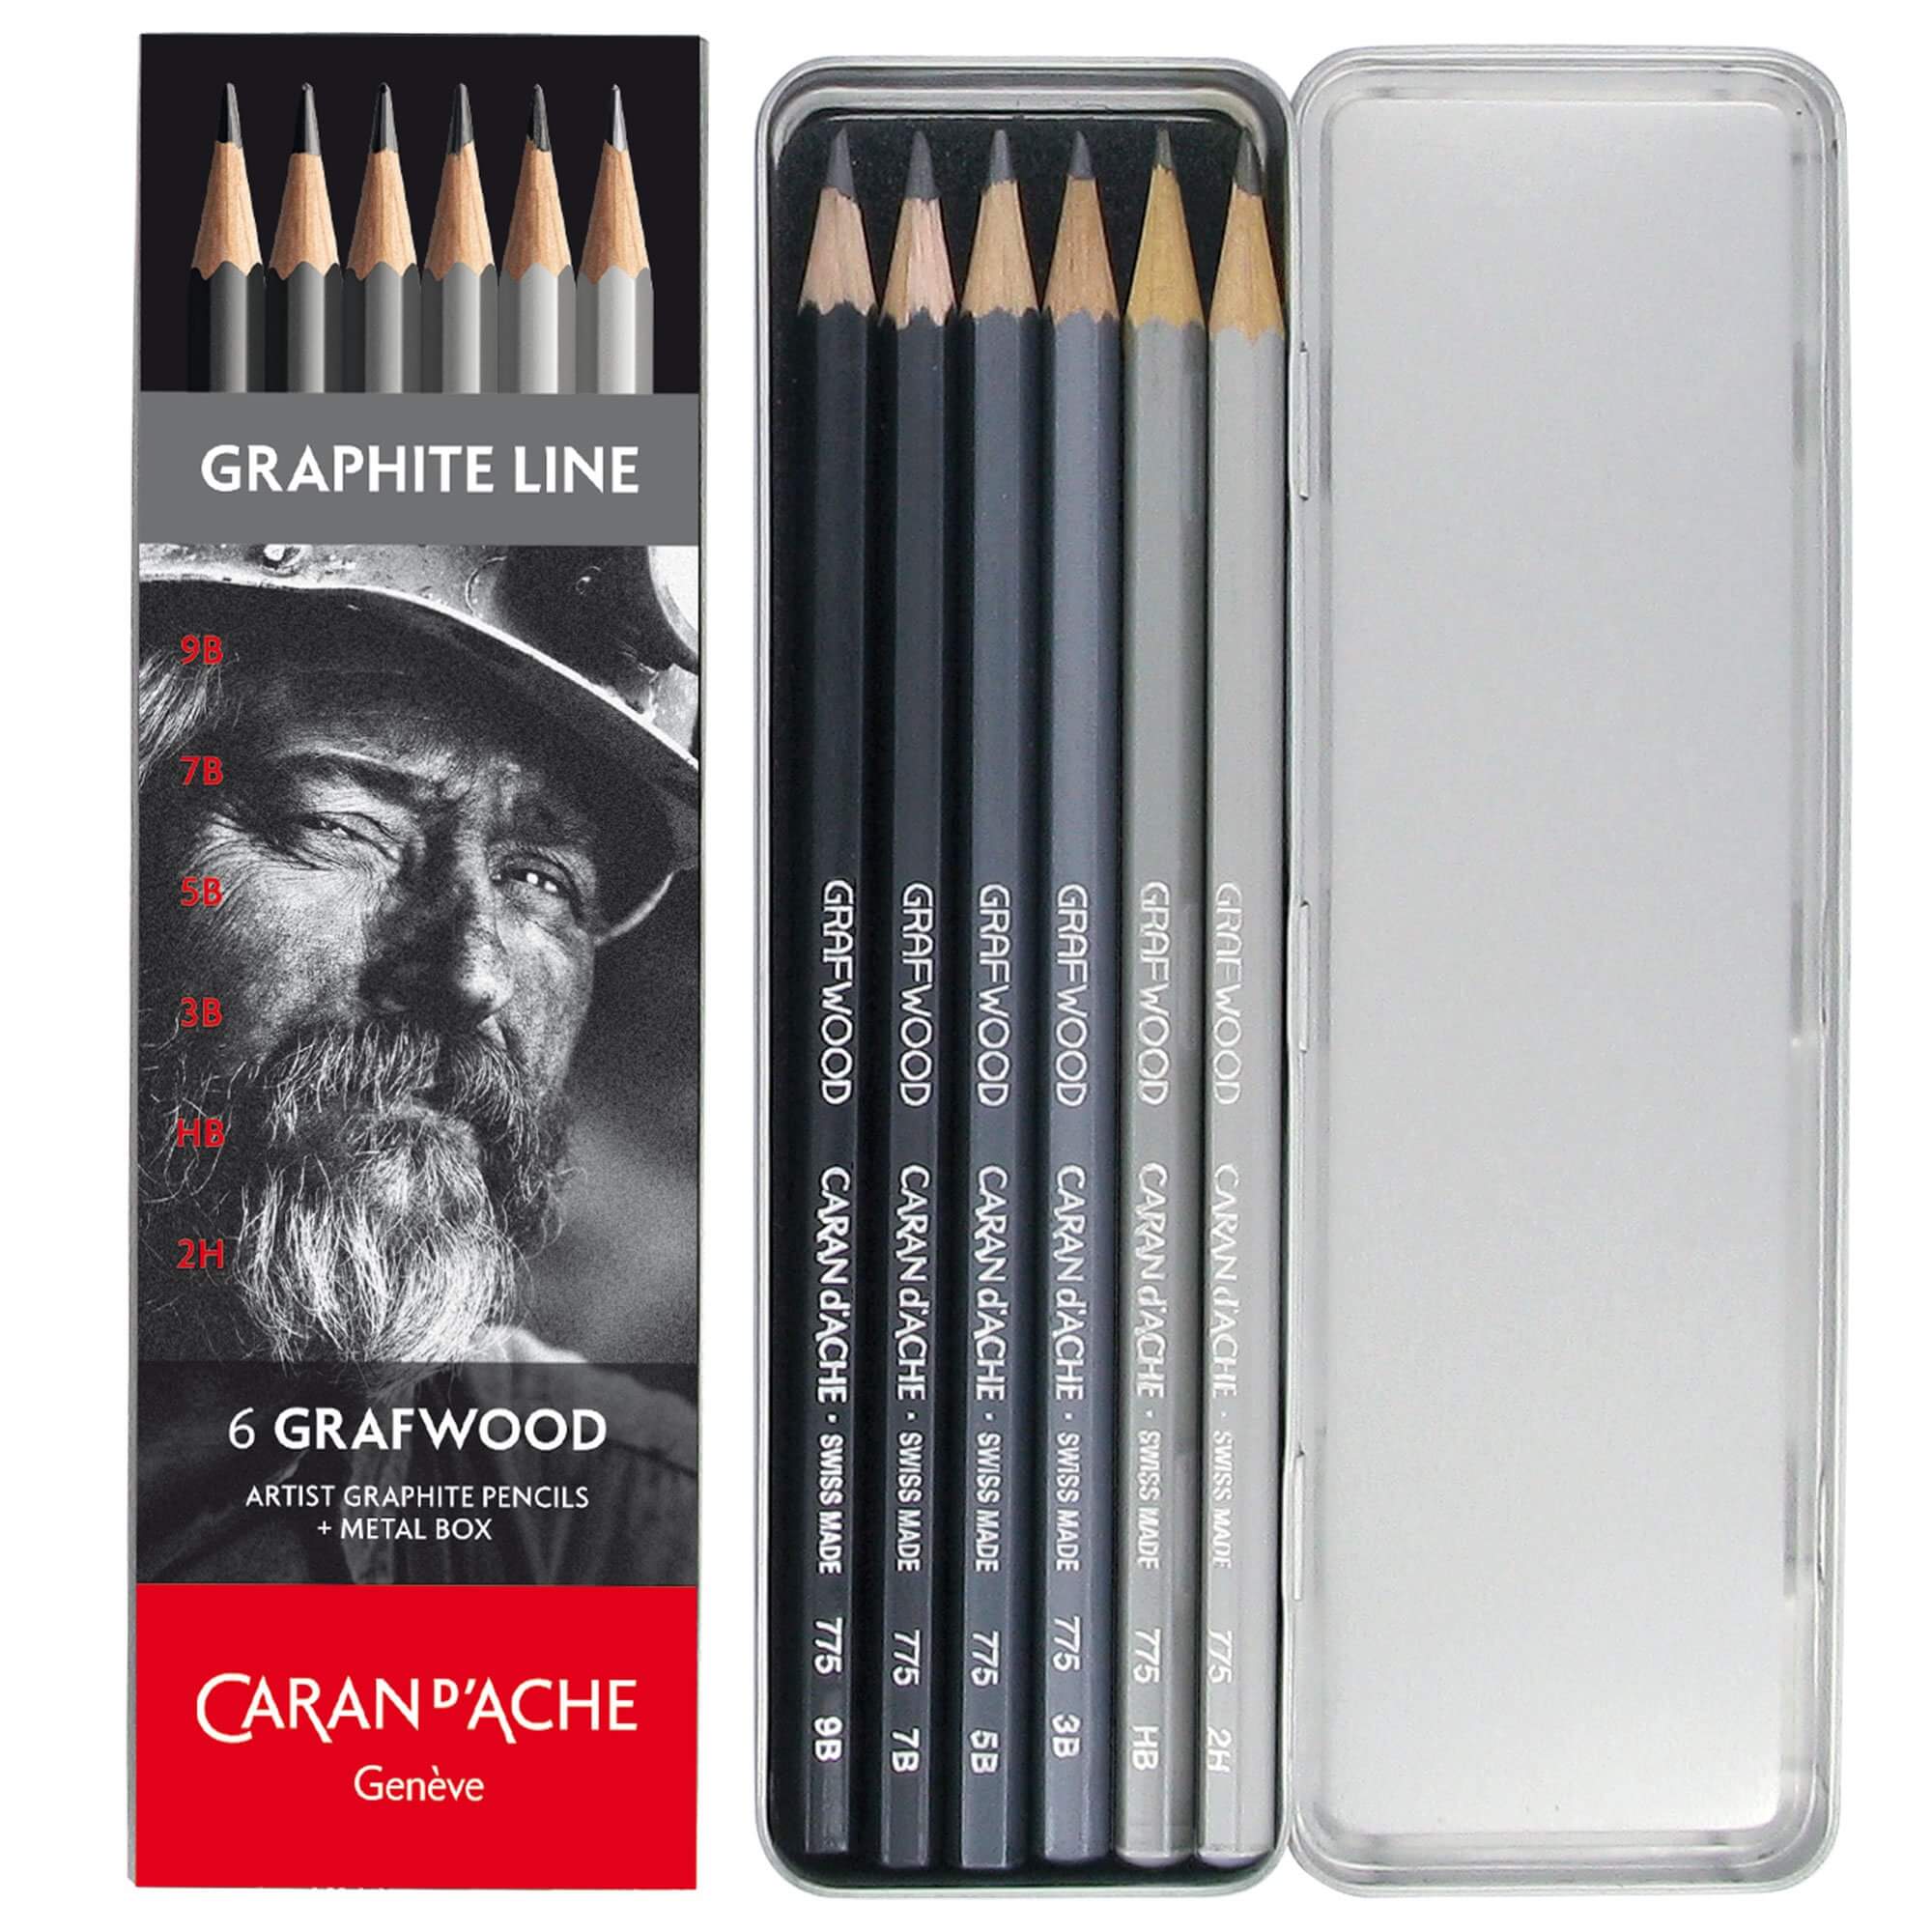 Caran d'Ache 6 Grafwood Artist Graphite Pencils + Metal Box